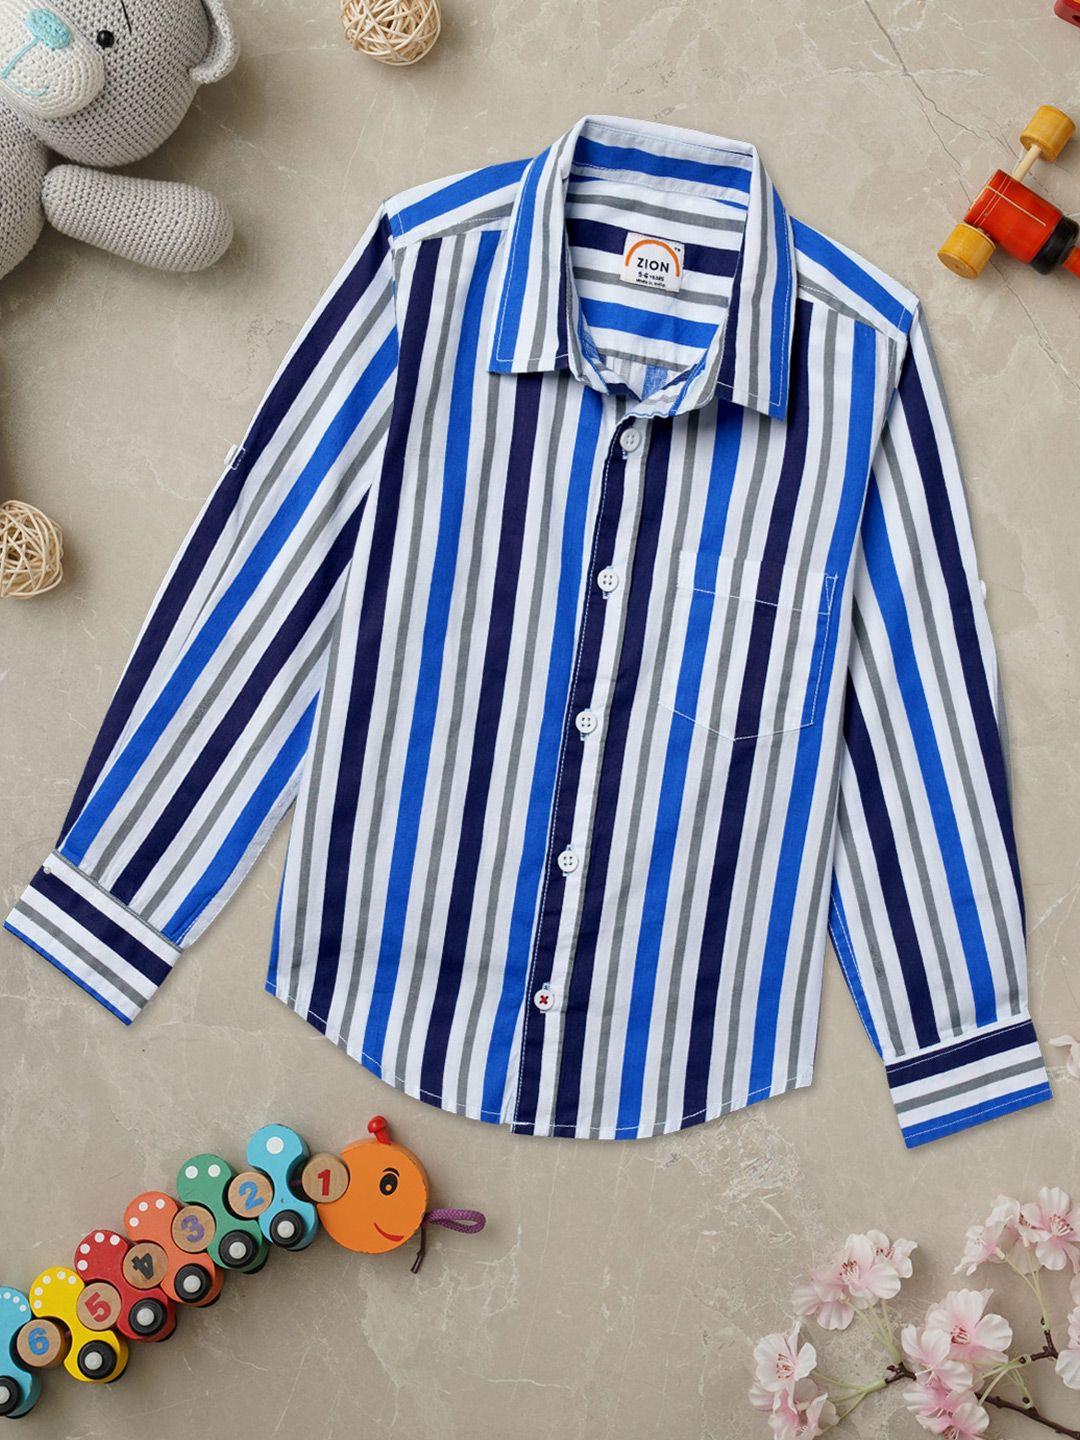 zion boys comfort striped cotton casual shirt